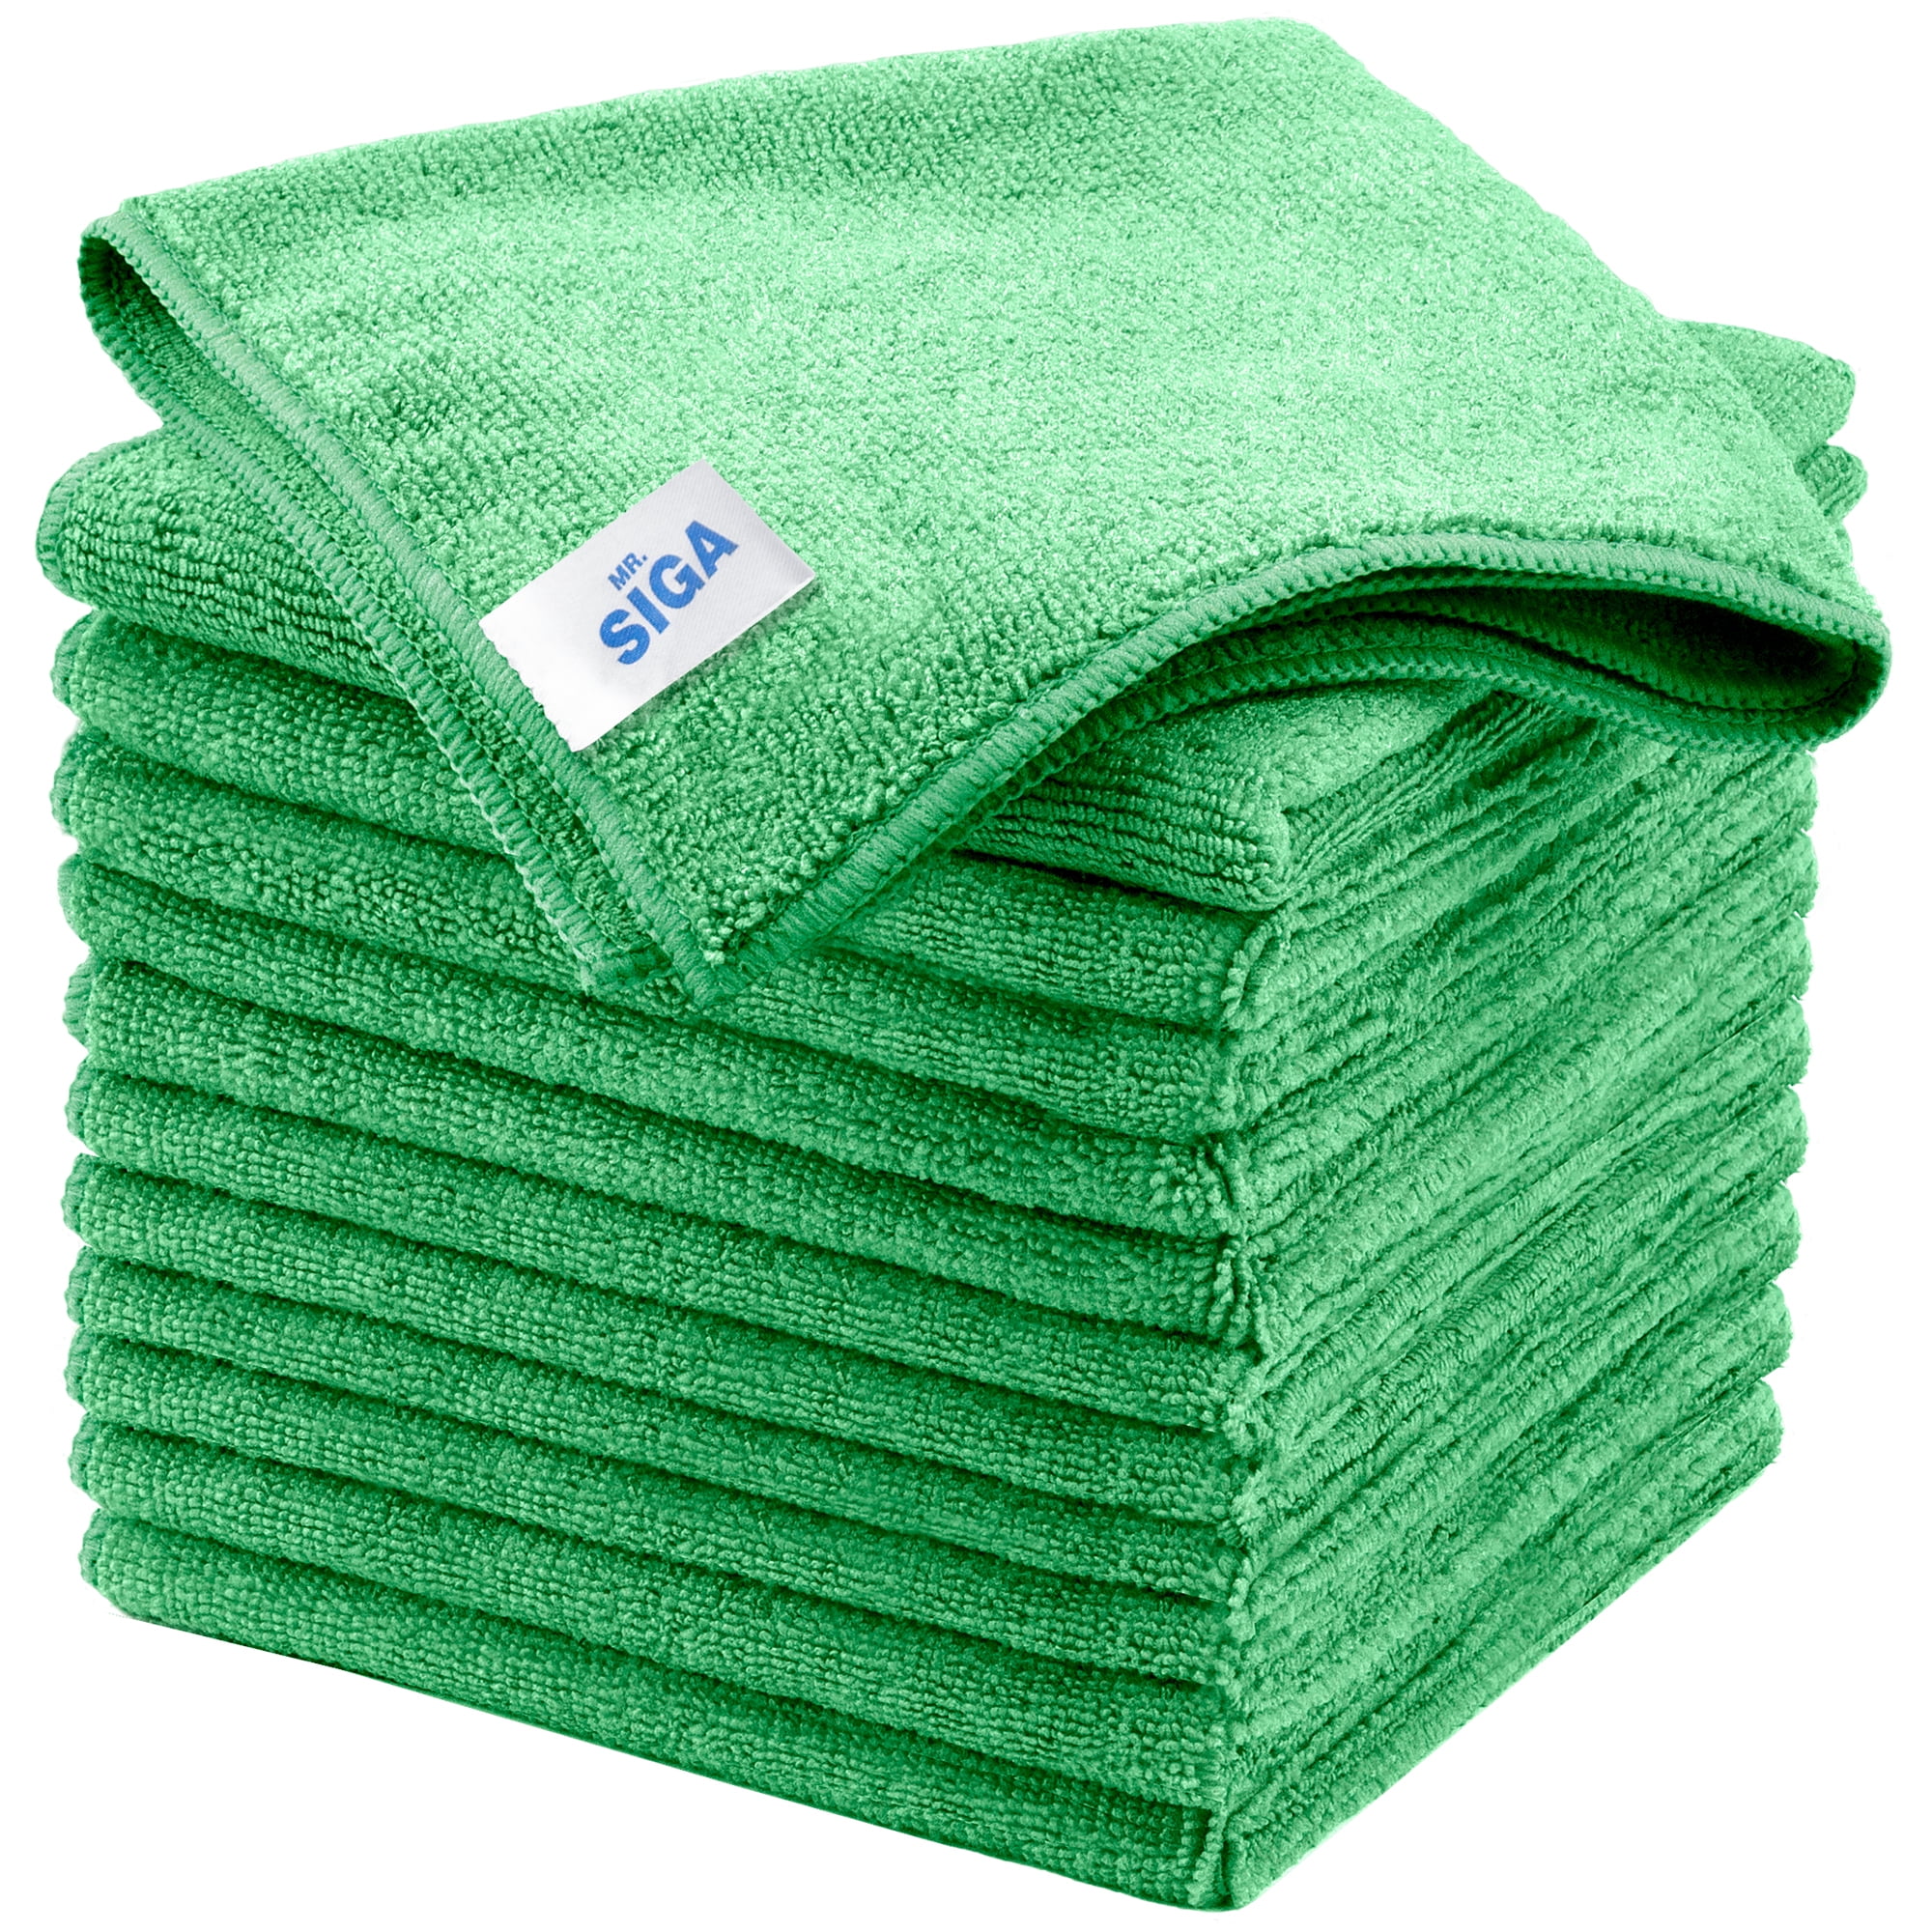 Restaurantware Clean Tek Green Microfiber Cleaning Cloth - 16 inch x 16 inch - 100 Count Box